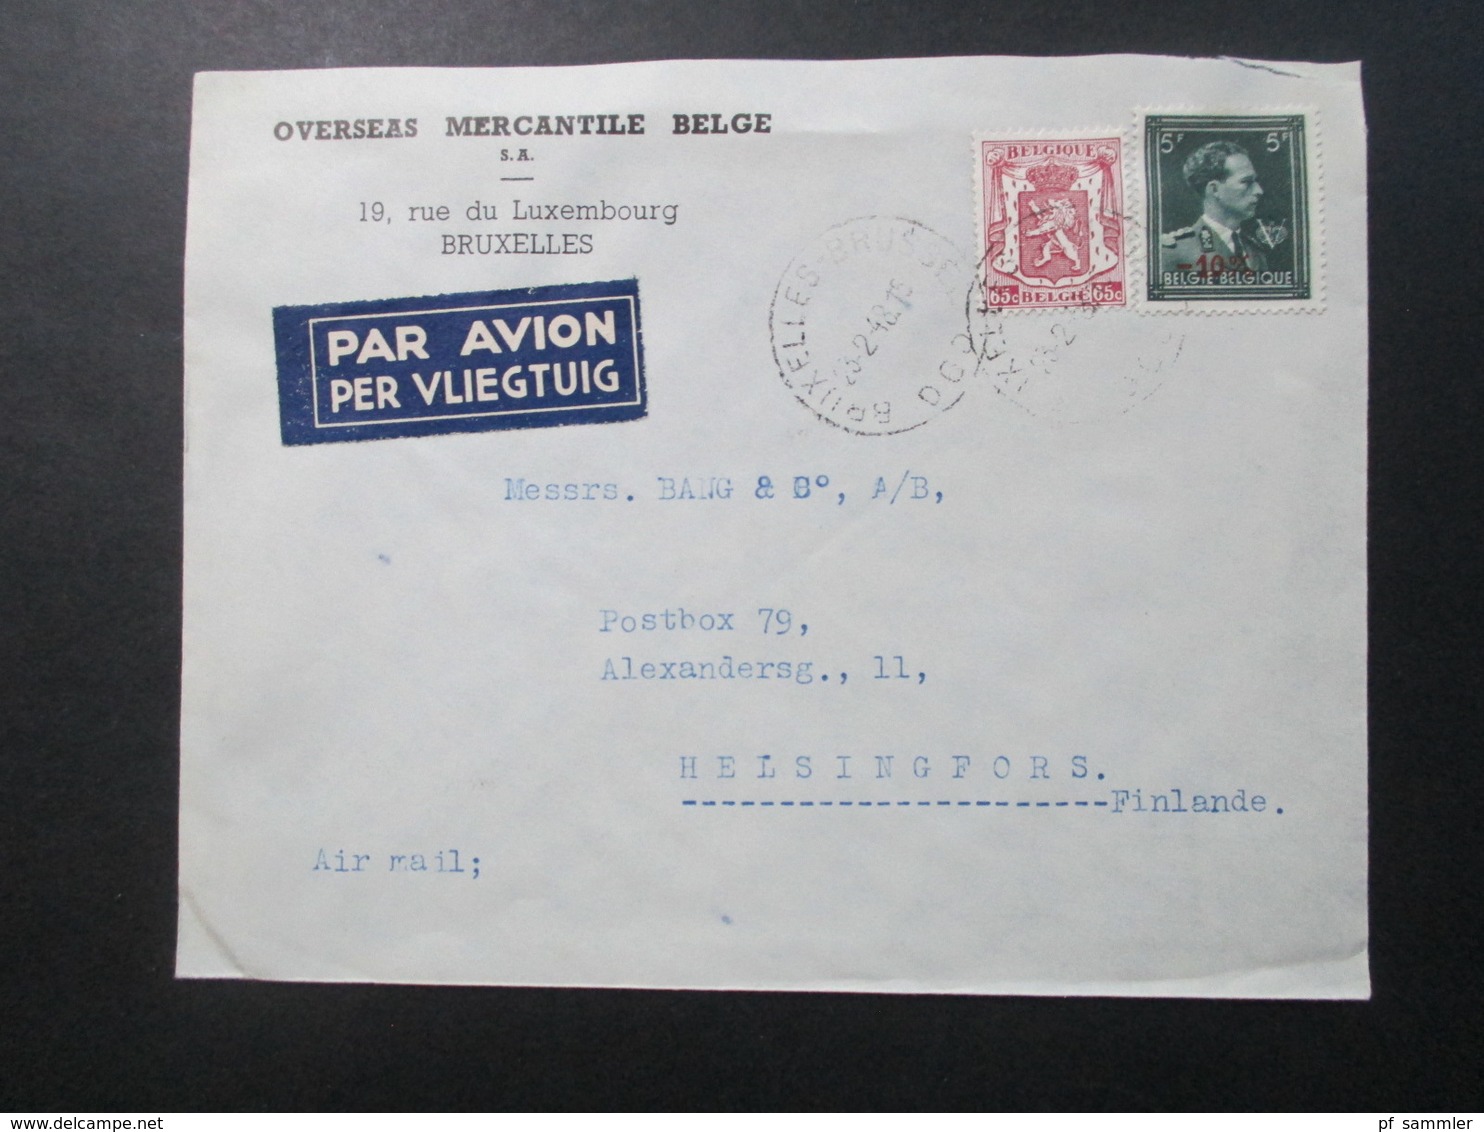 Belgien 1946 Auslandsbrief Nach Finnland Mit Nr. 750 MiF Luftpost Overseas Mercantile Belge Rue Du Luxembourg Bruxelles - 1946 -10%